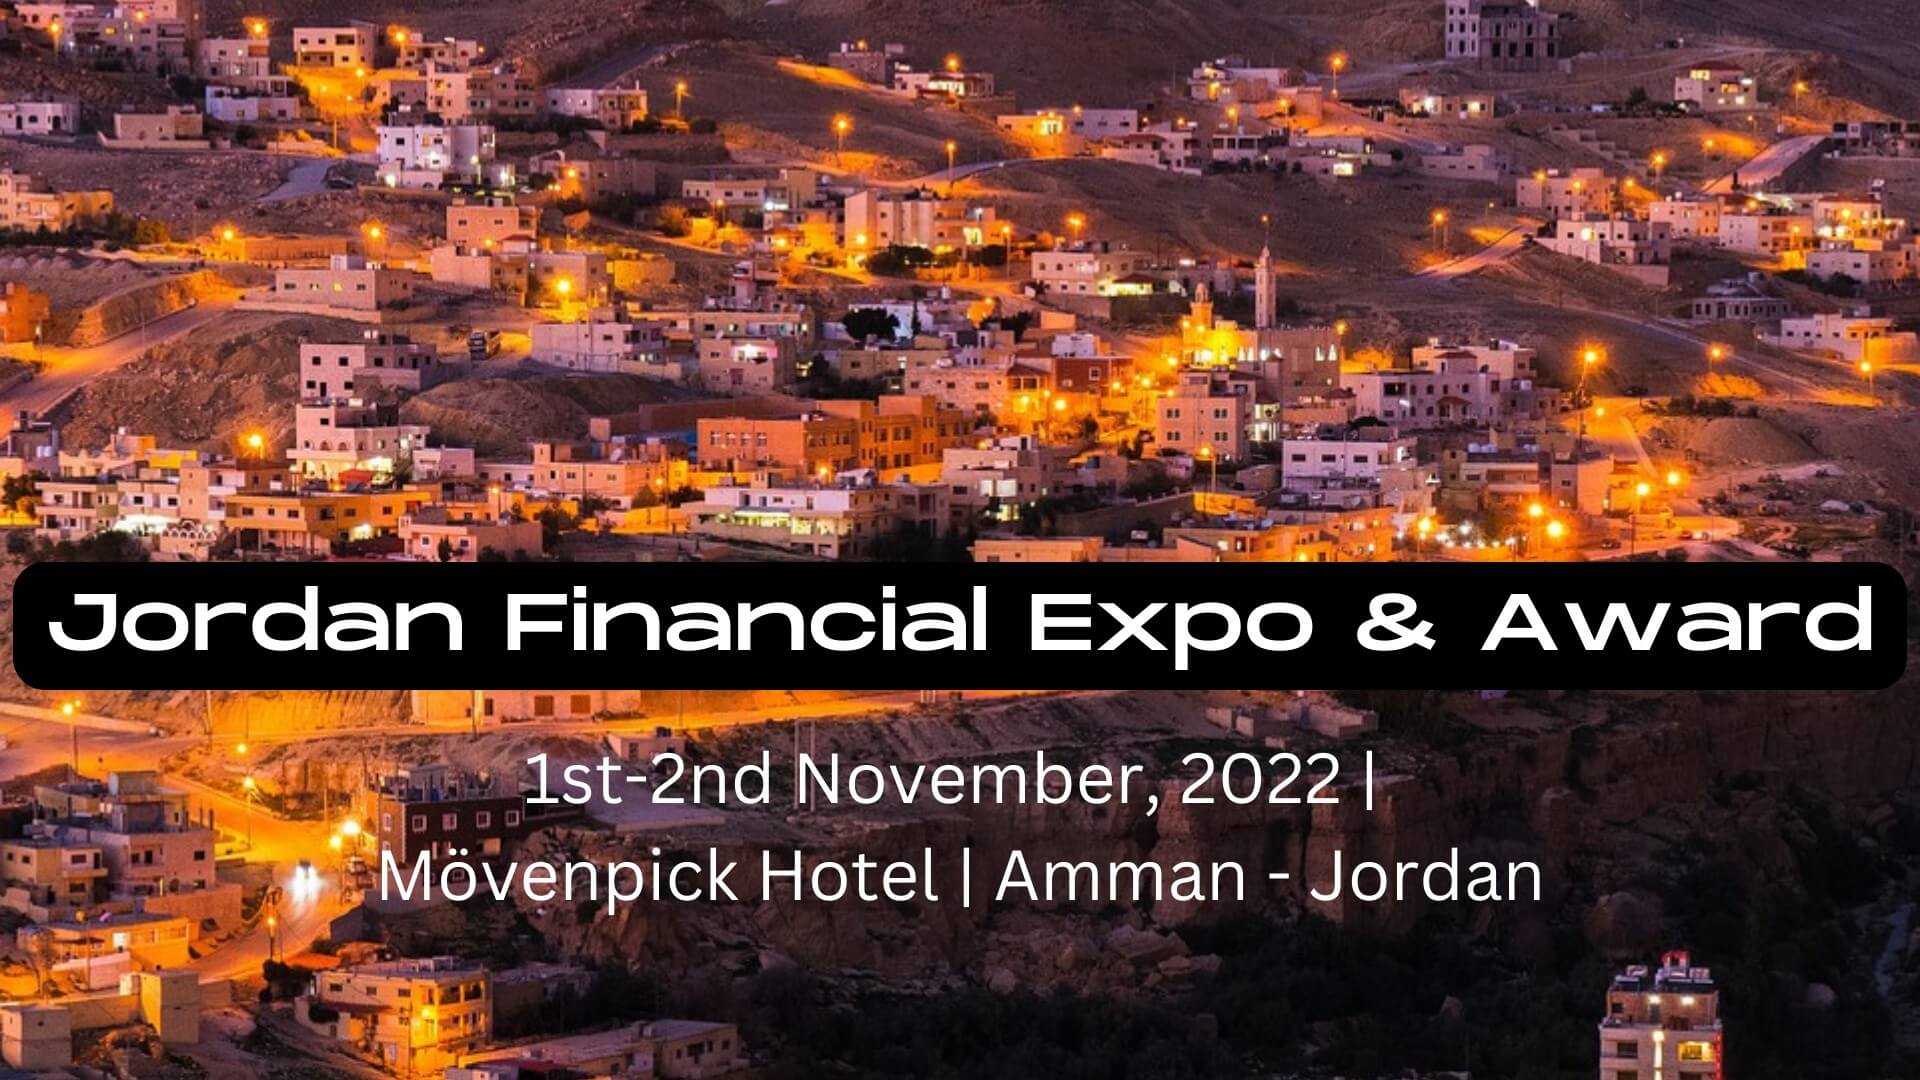 Jordan Financial Expo and Award 1